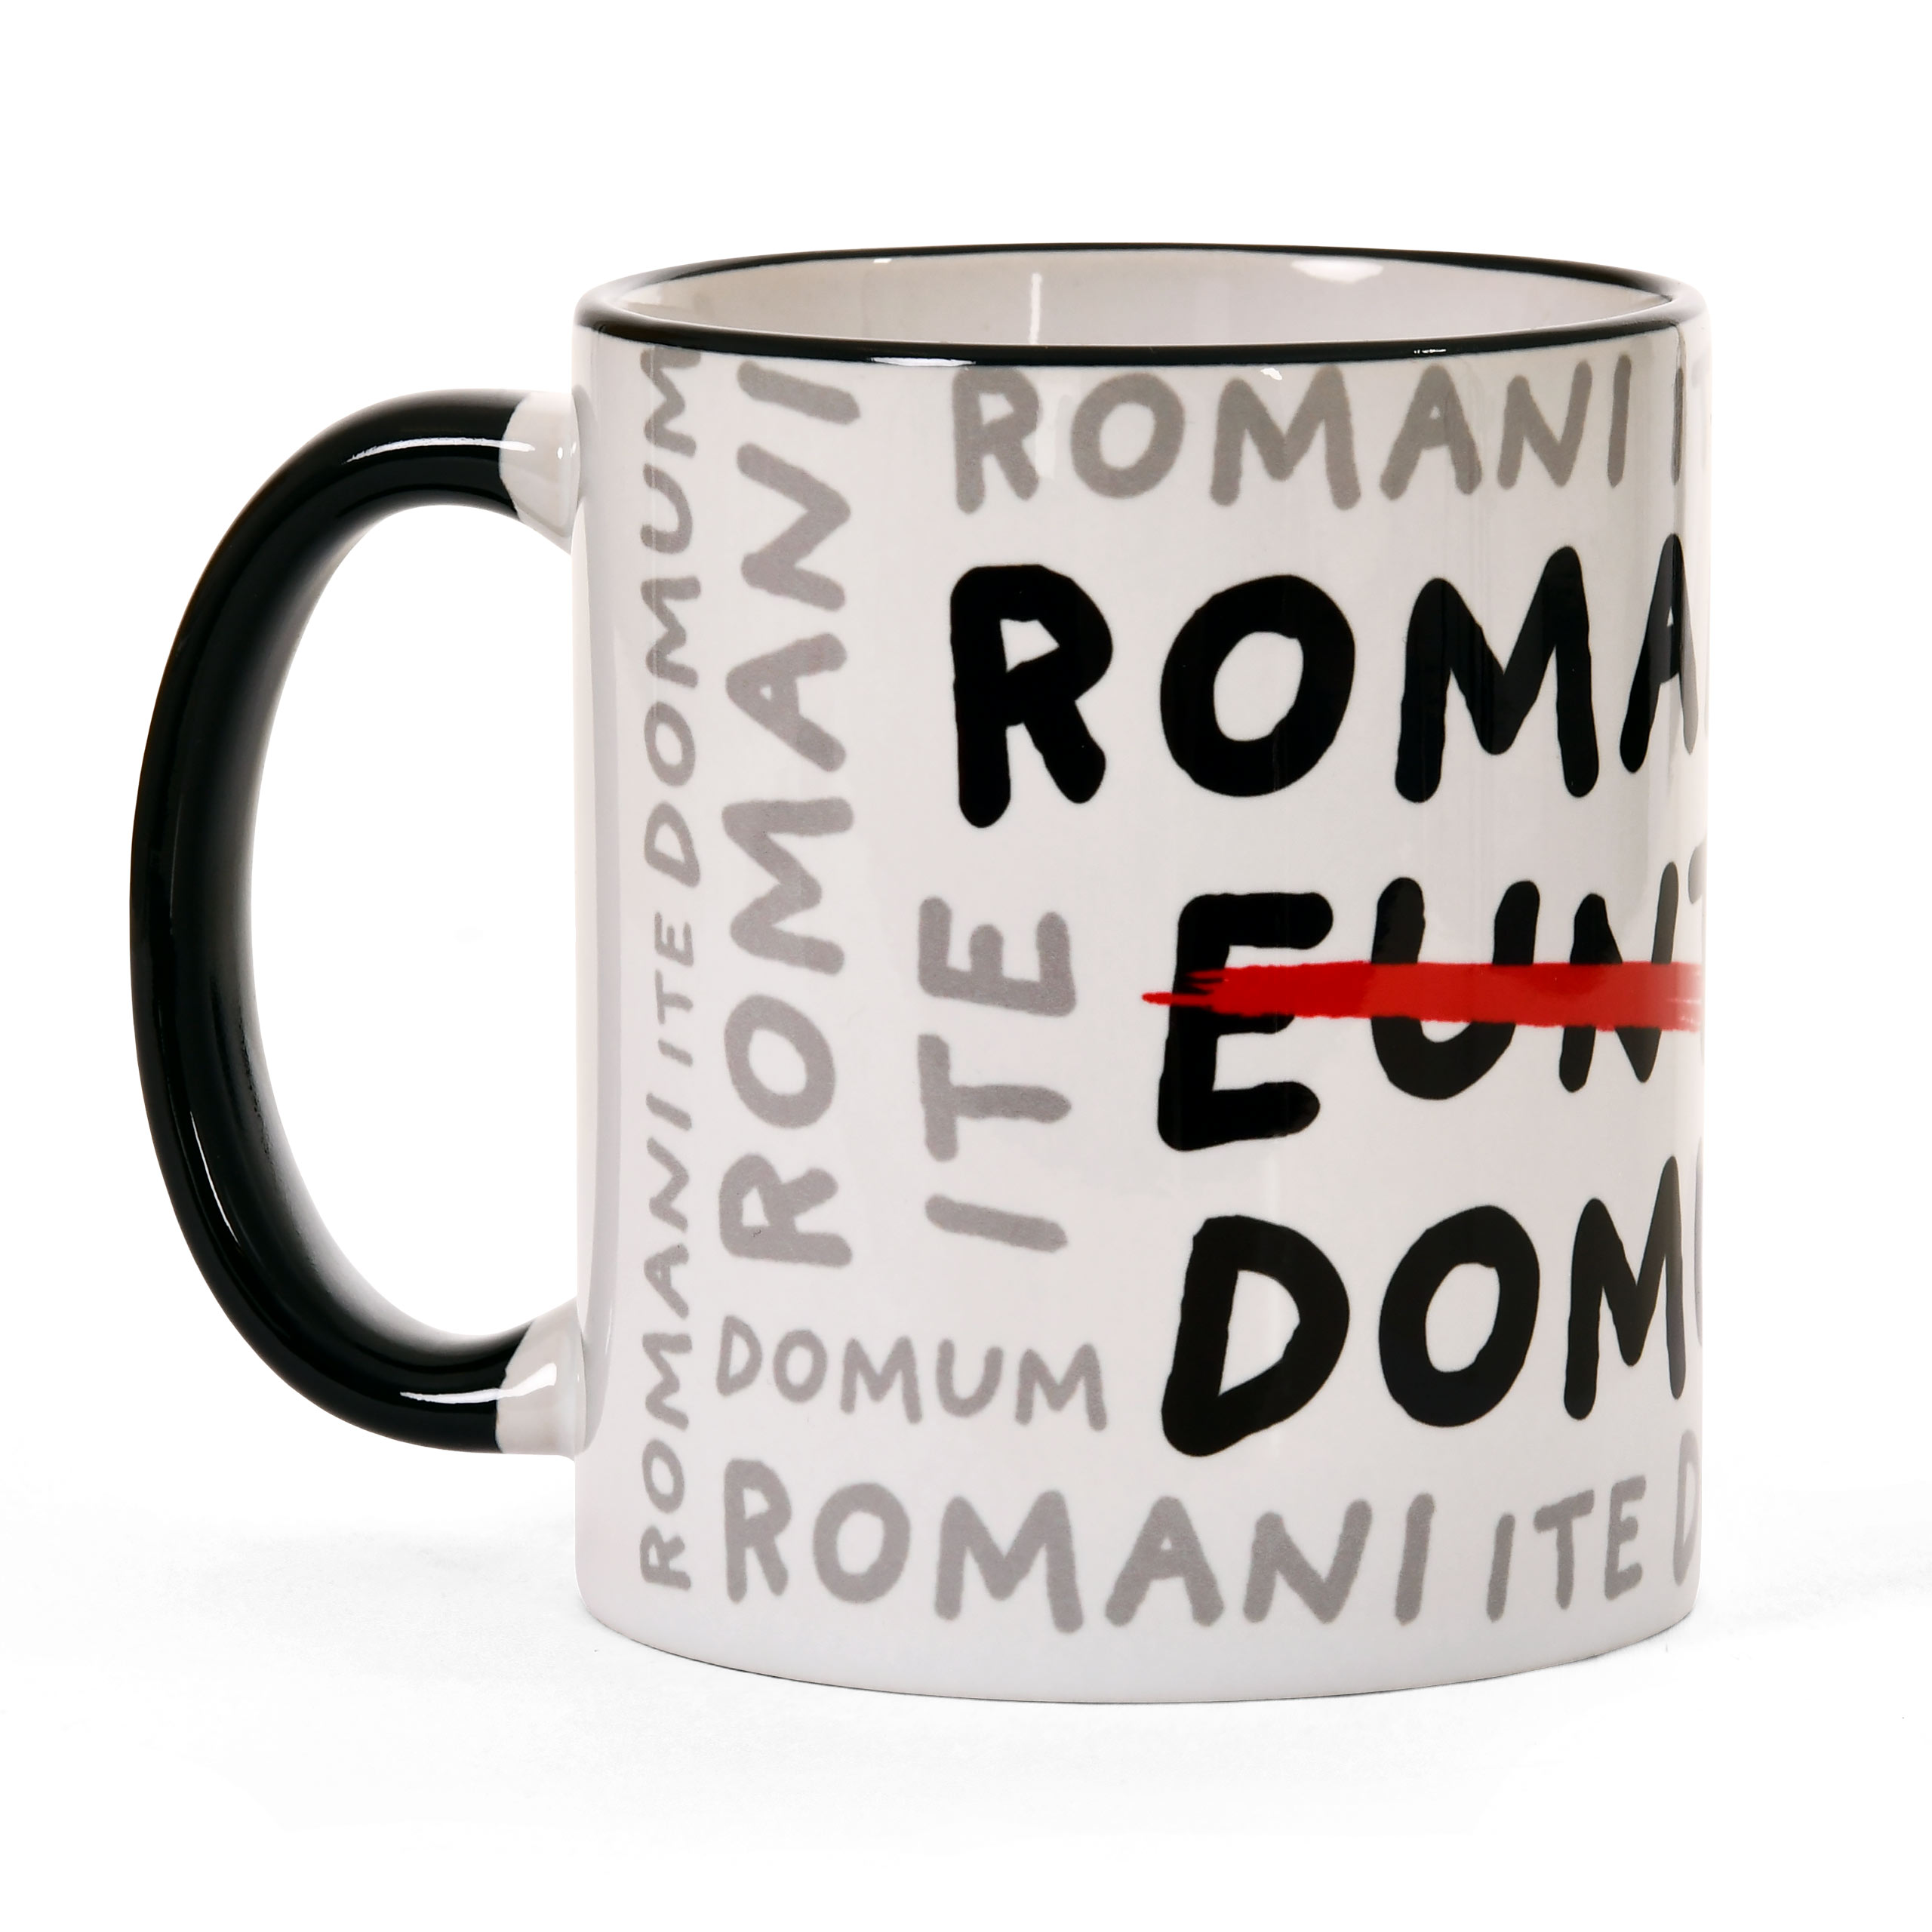 Romani Ite Domum mok voor Monty Python fans